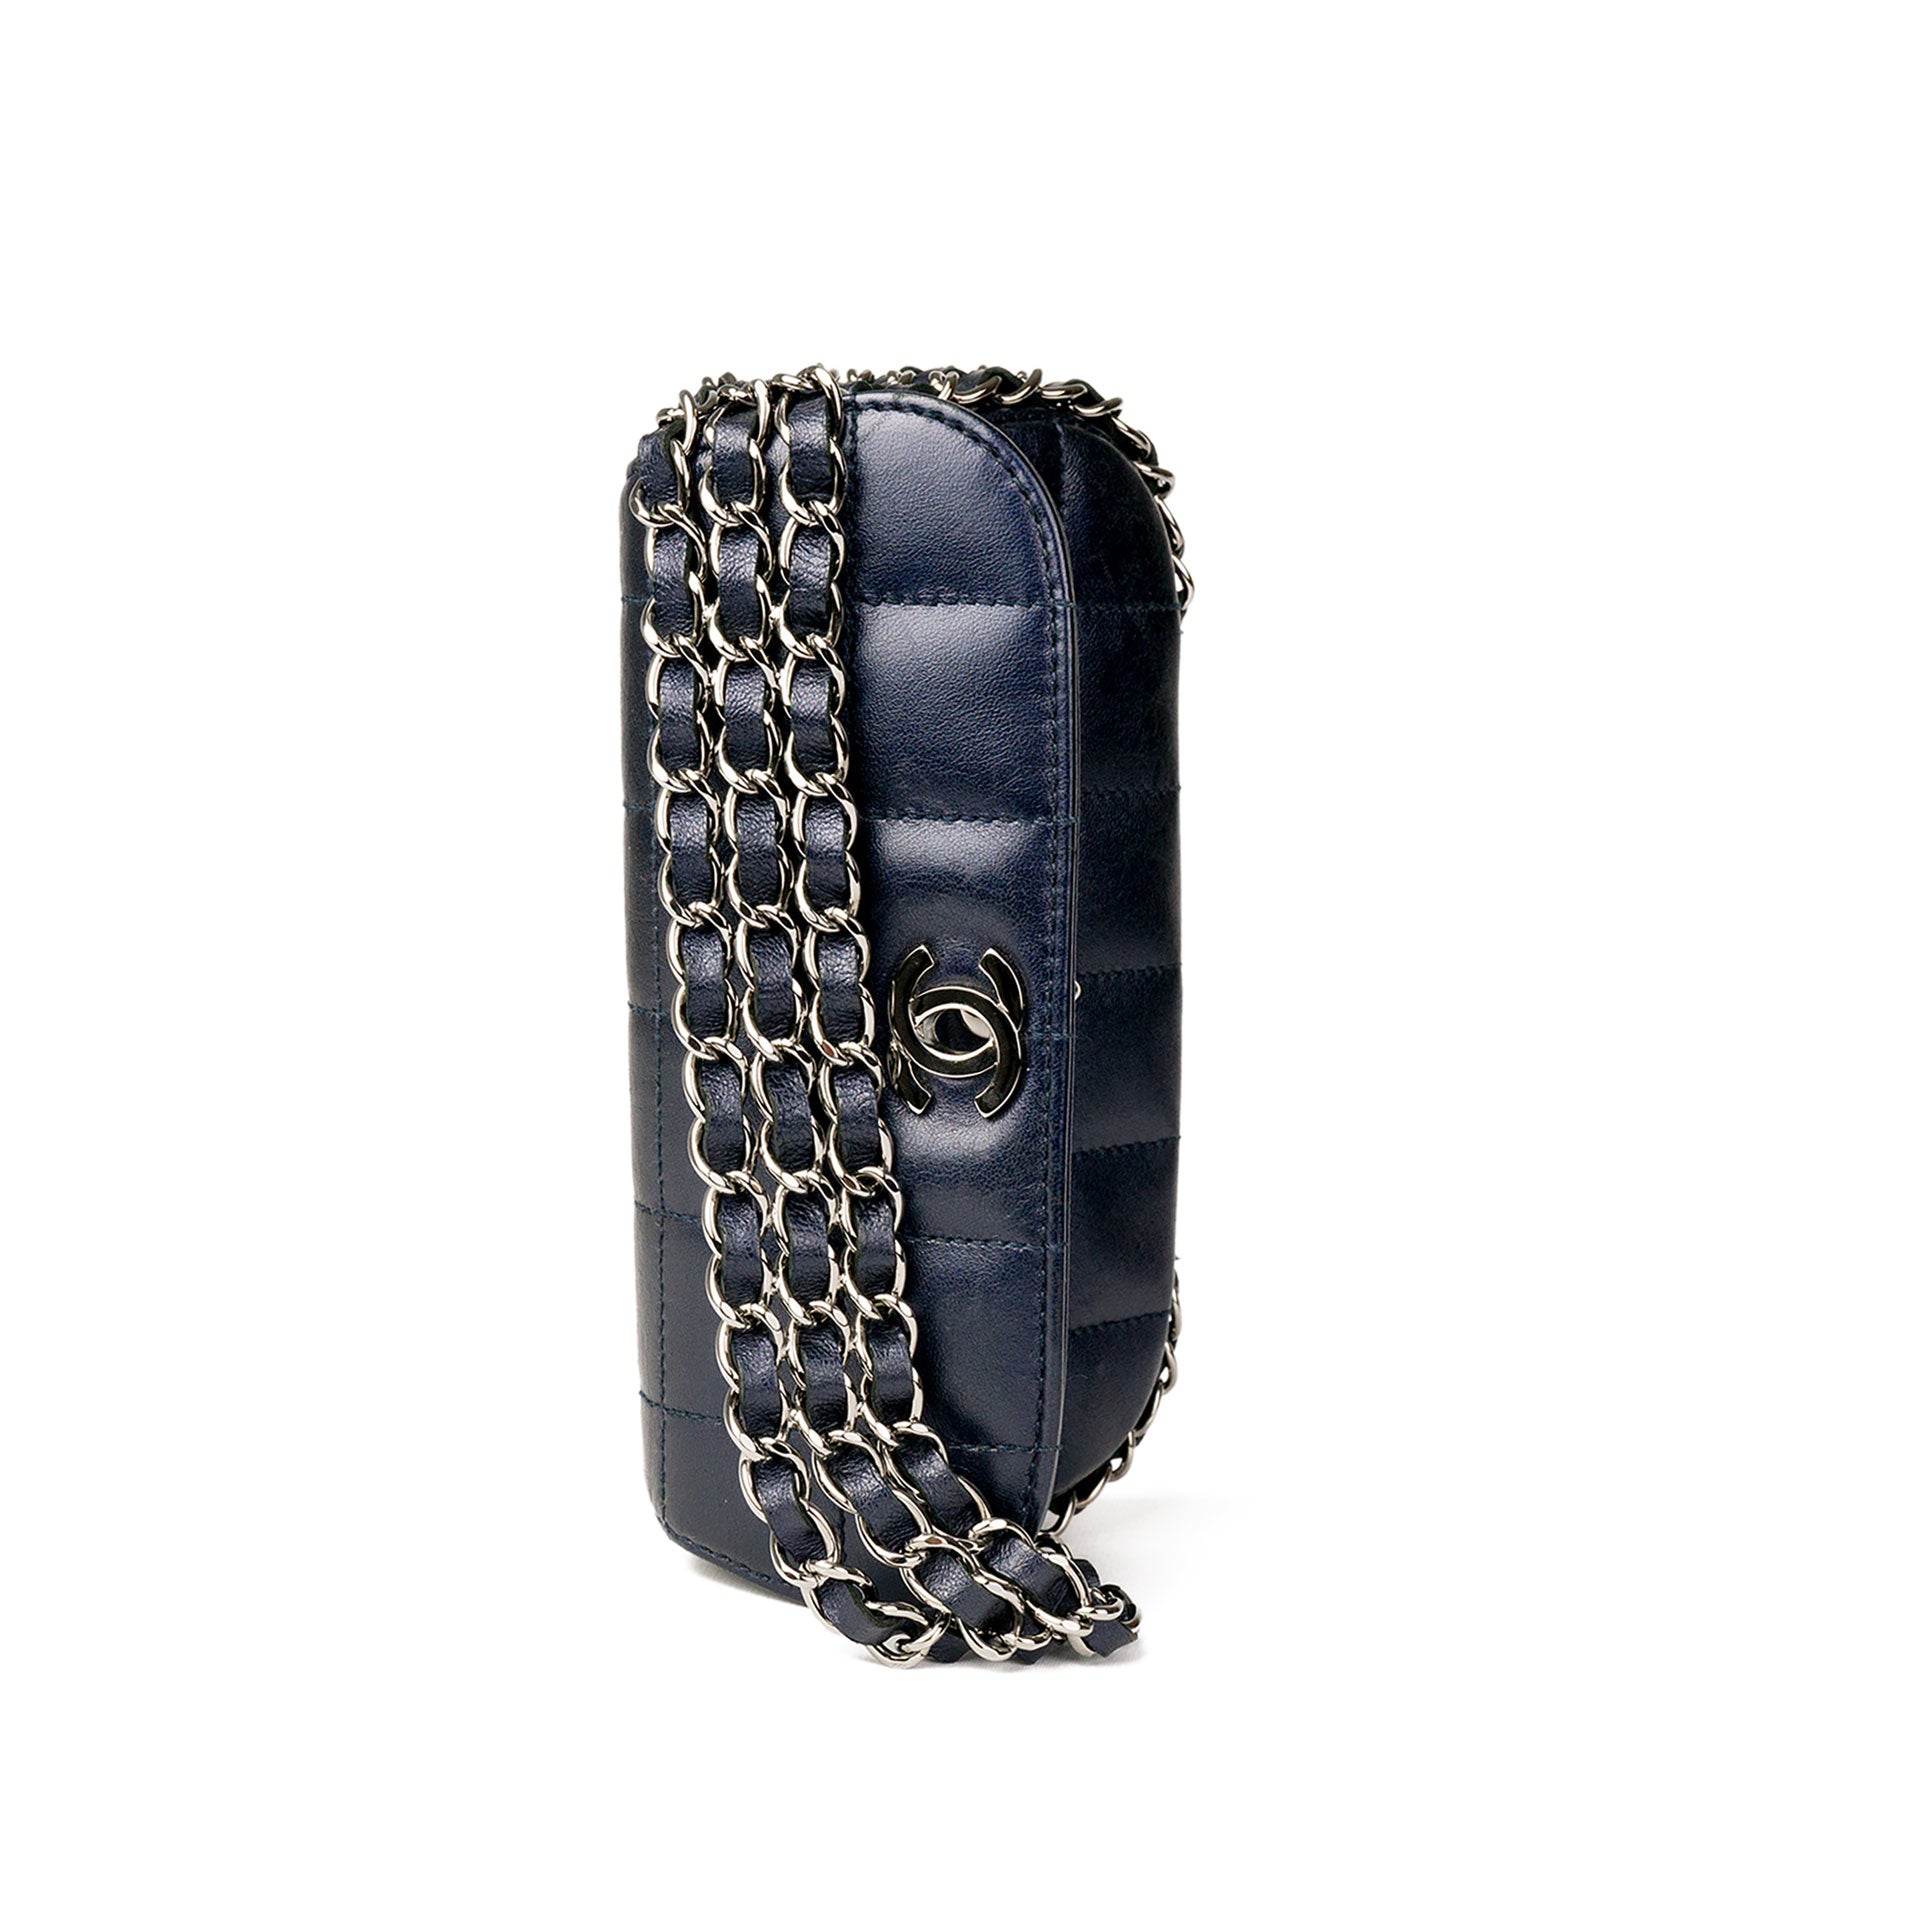 Chanel - Chain Around Mini Crossbody / Clutch - Black / Silver Leather Bag